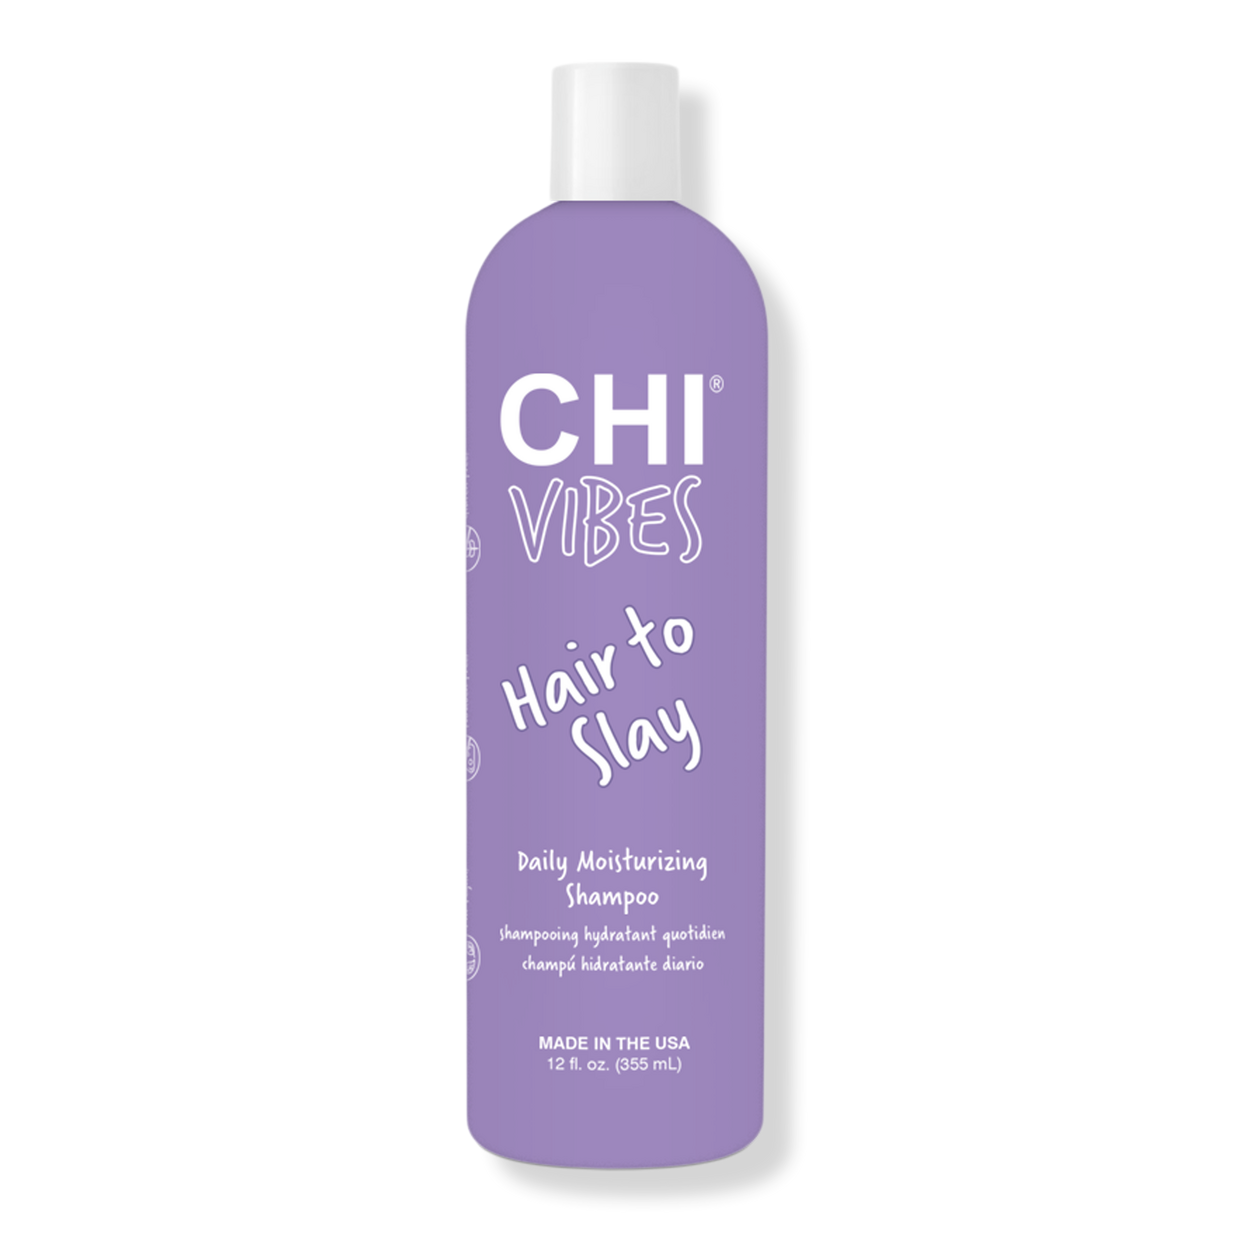 Hvornår At blokere influenza Vibes Hair to Slay Daily Moisturizing Shampoo - Chi | Ulta Beauty